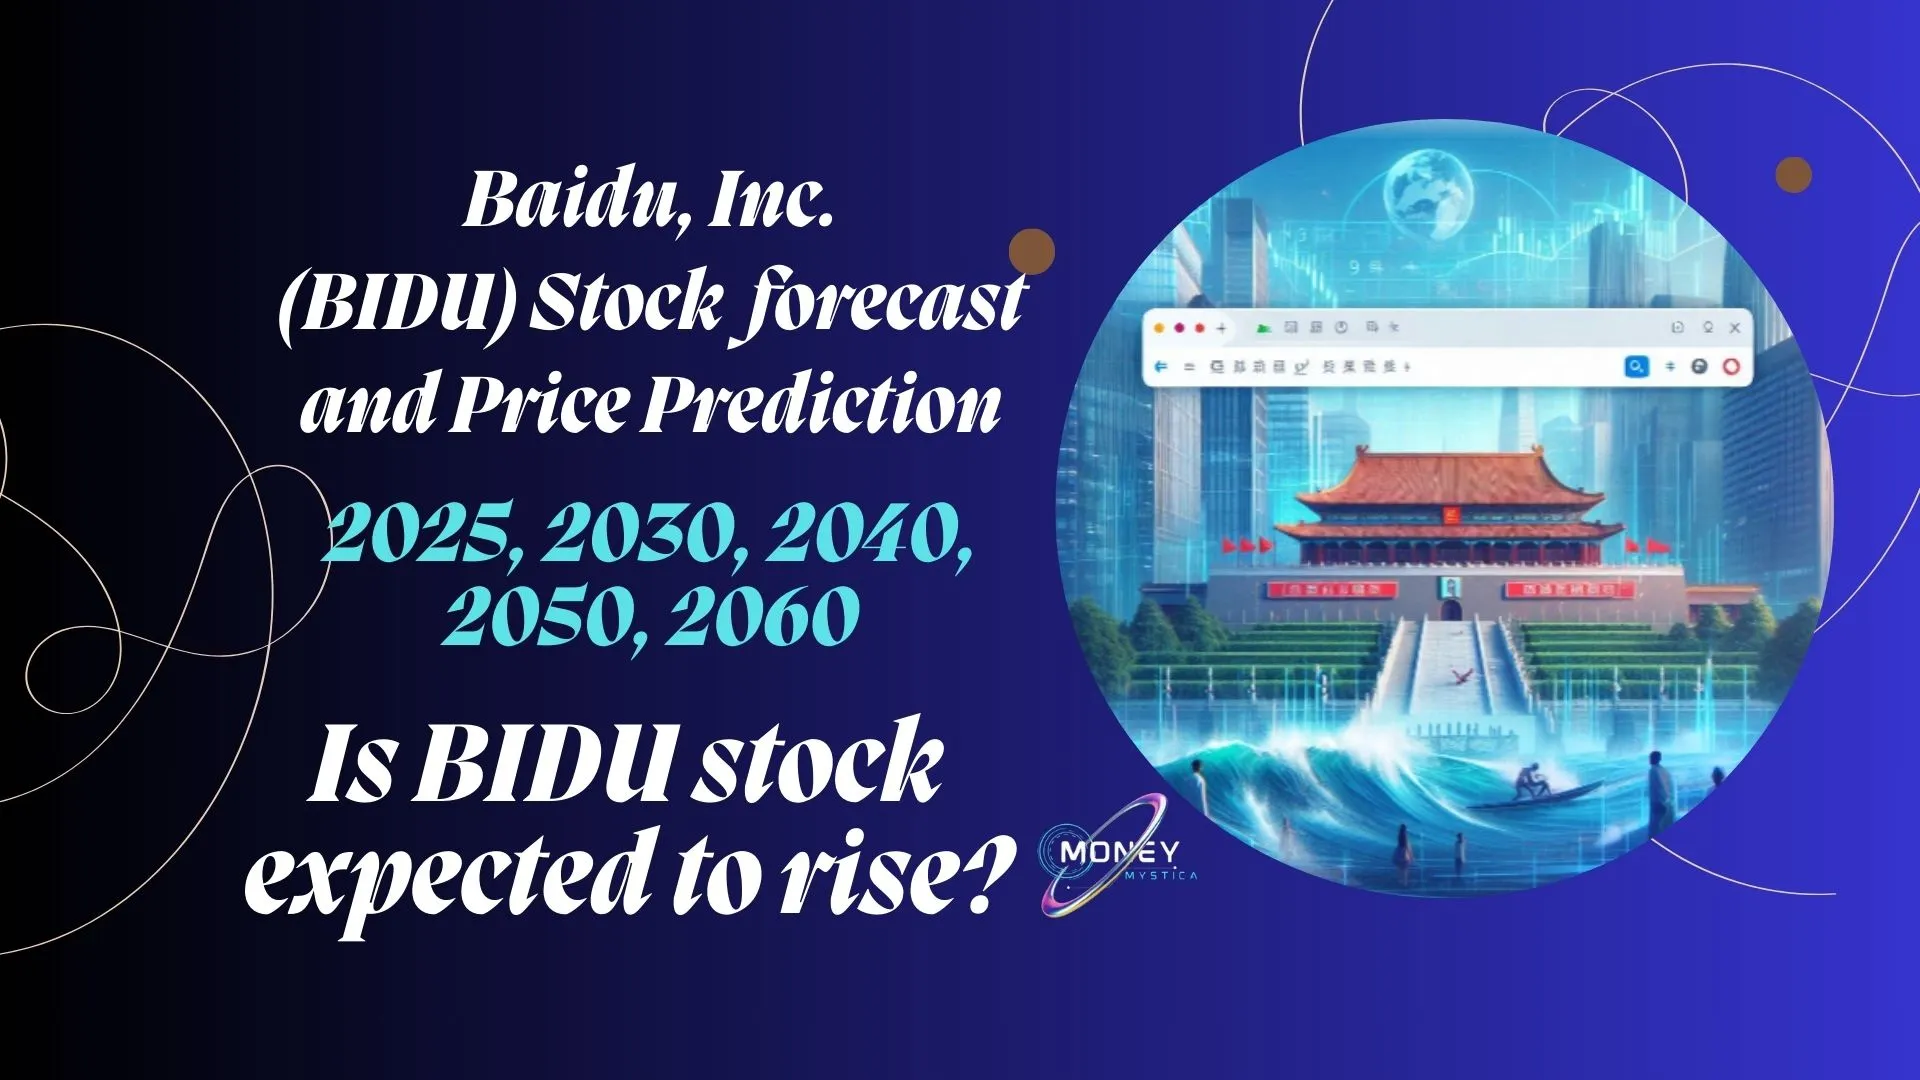 Baidu, Inc. (BIDU) Stock forecast and price prediction